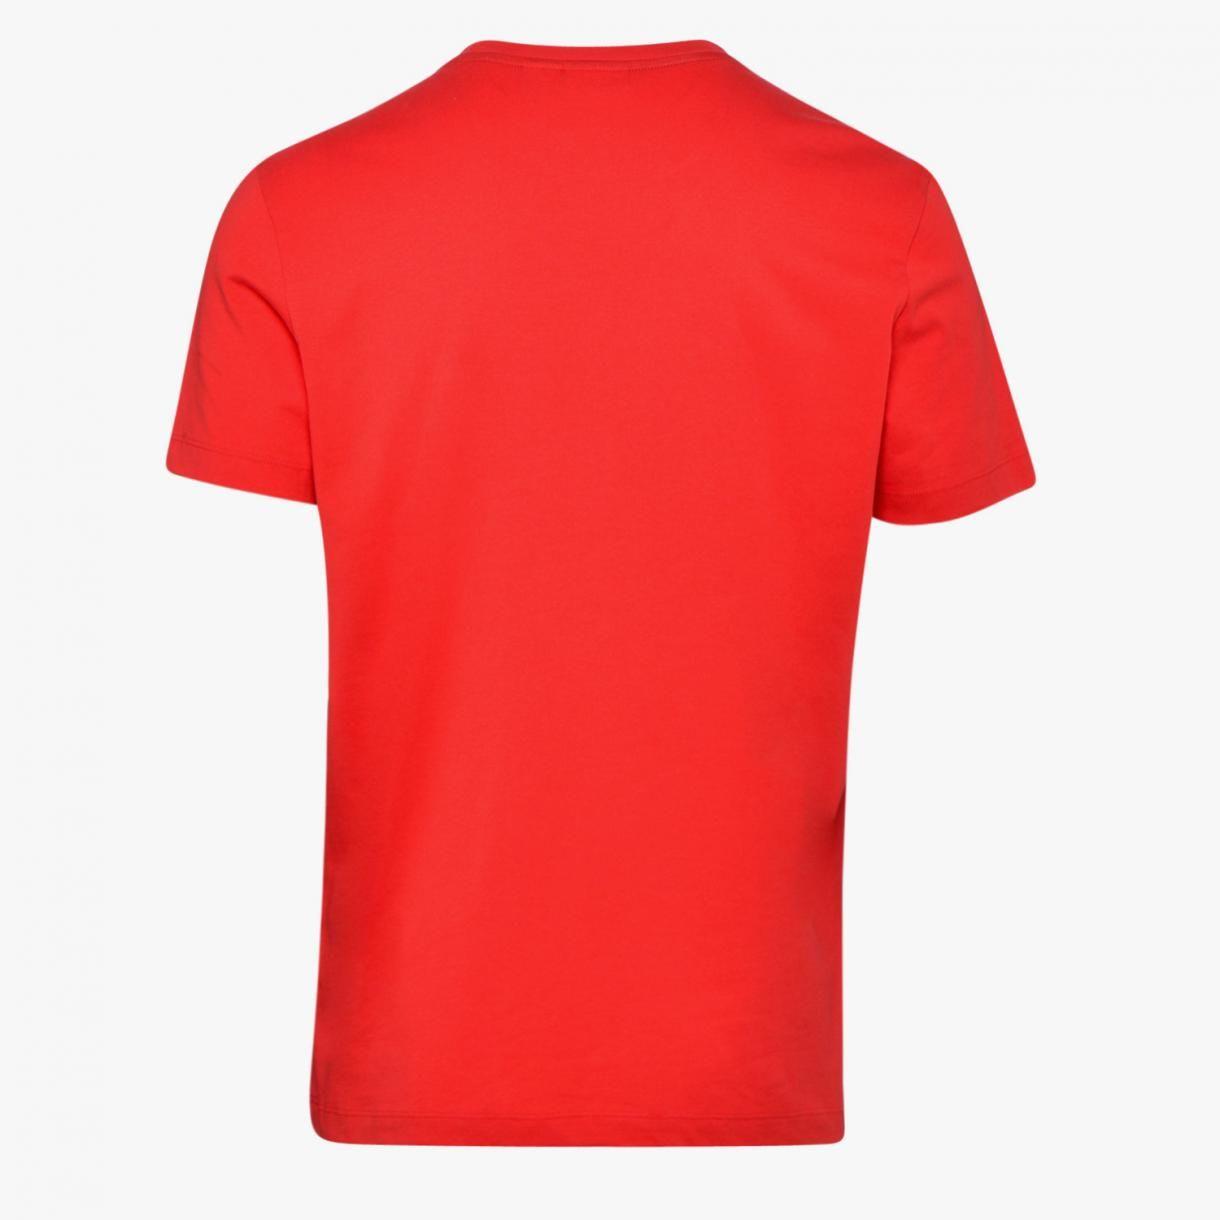 Diadora Shirt Logo - Diadora Mens SS T SHIRT LOGO Carmine Red, Red T Shirts And Tank Tops